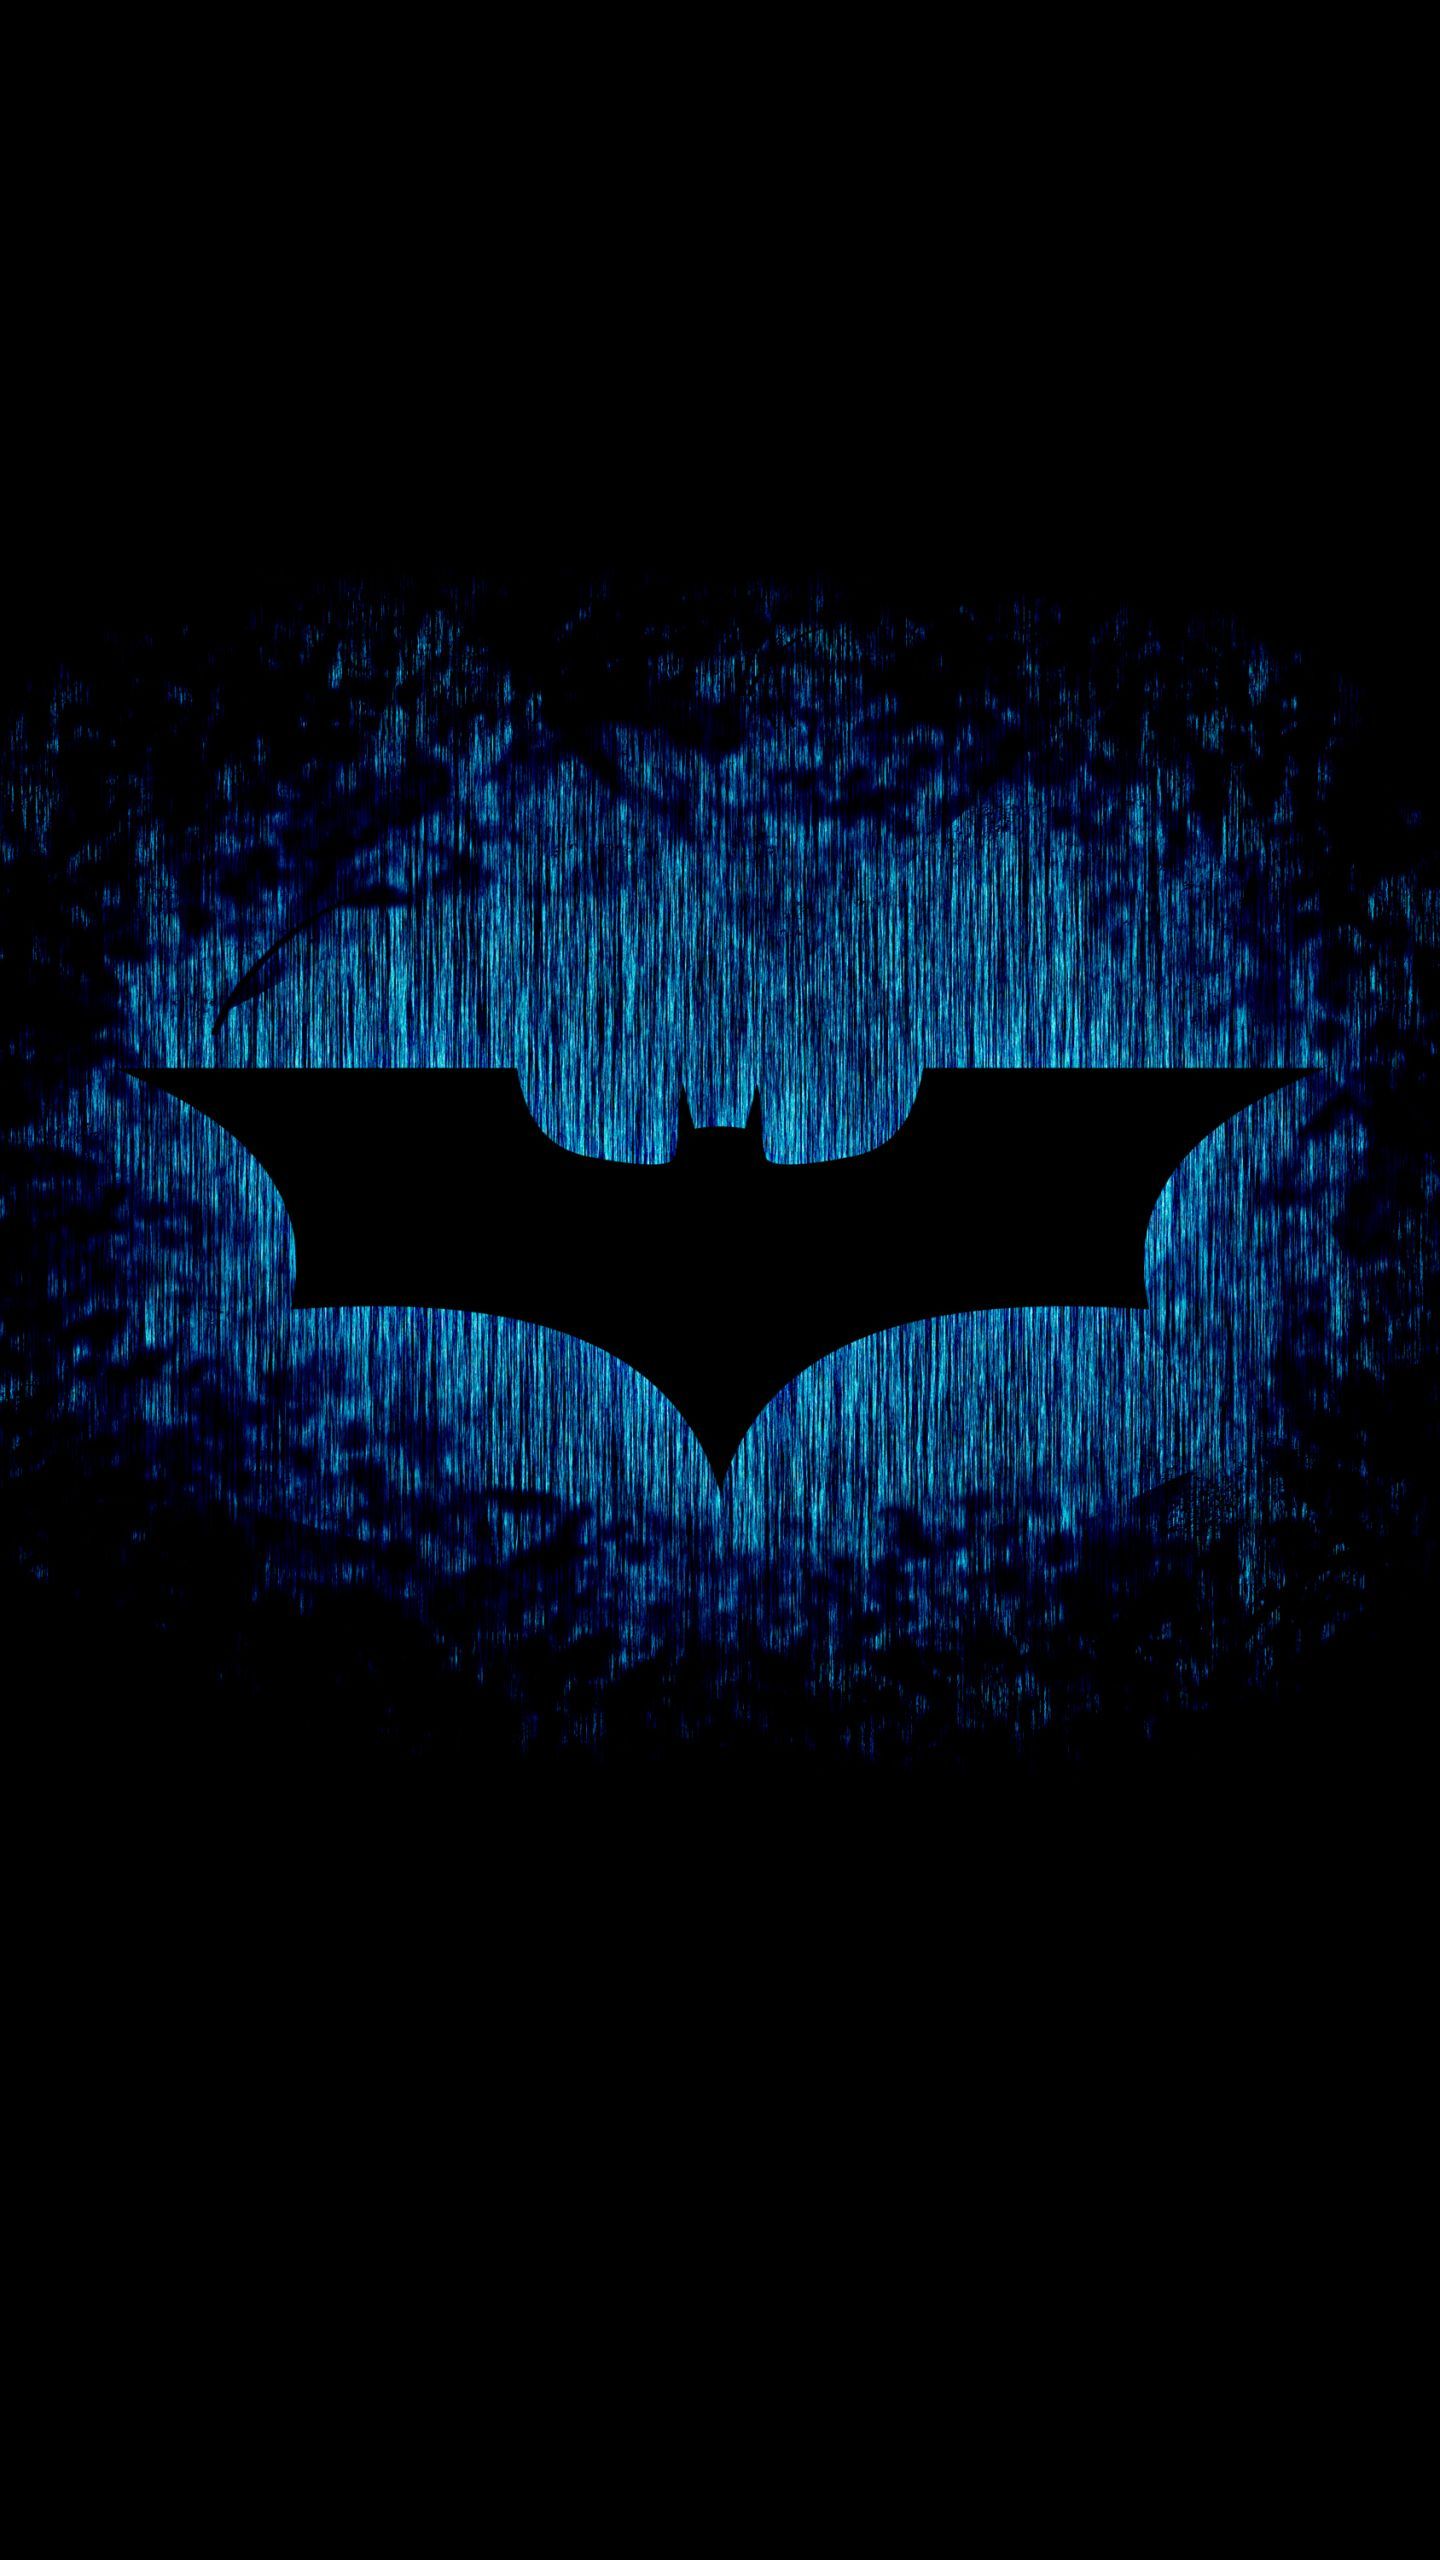 Megabyte), Batman IPhone. Batman wallpaper, Batman wallpaper iphone, Batman comic wallpaper